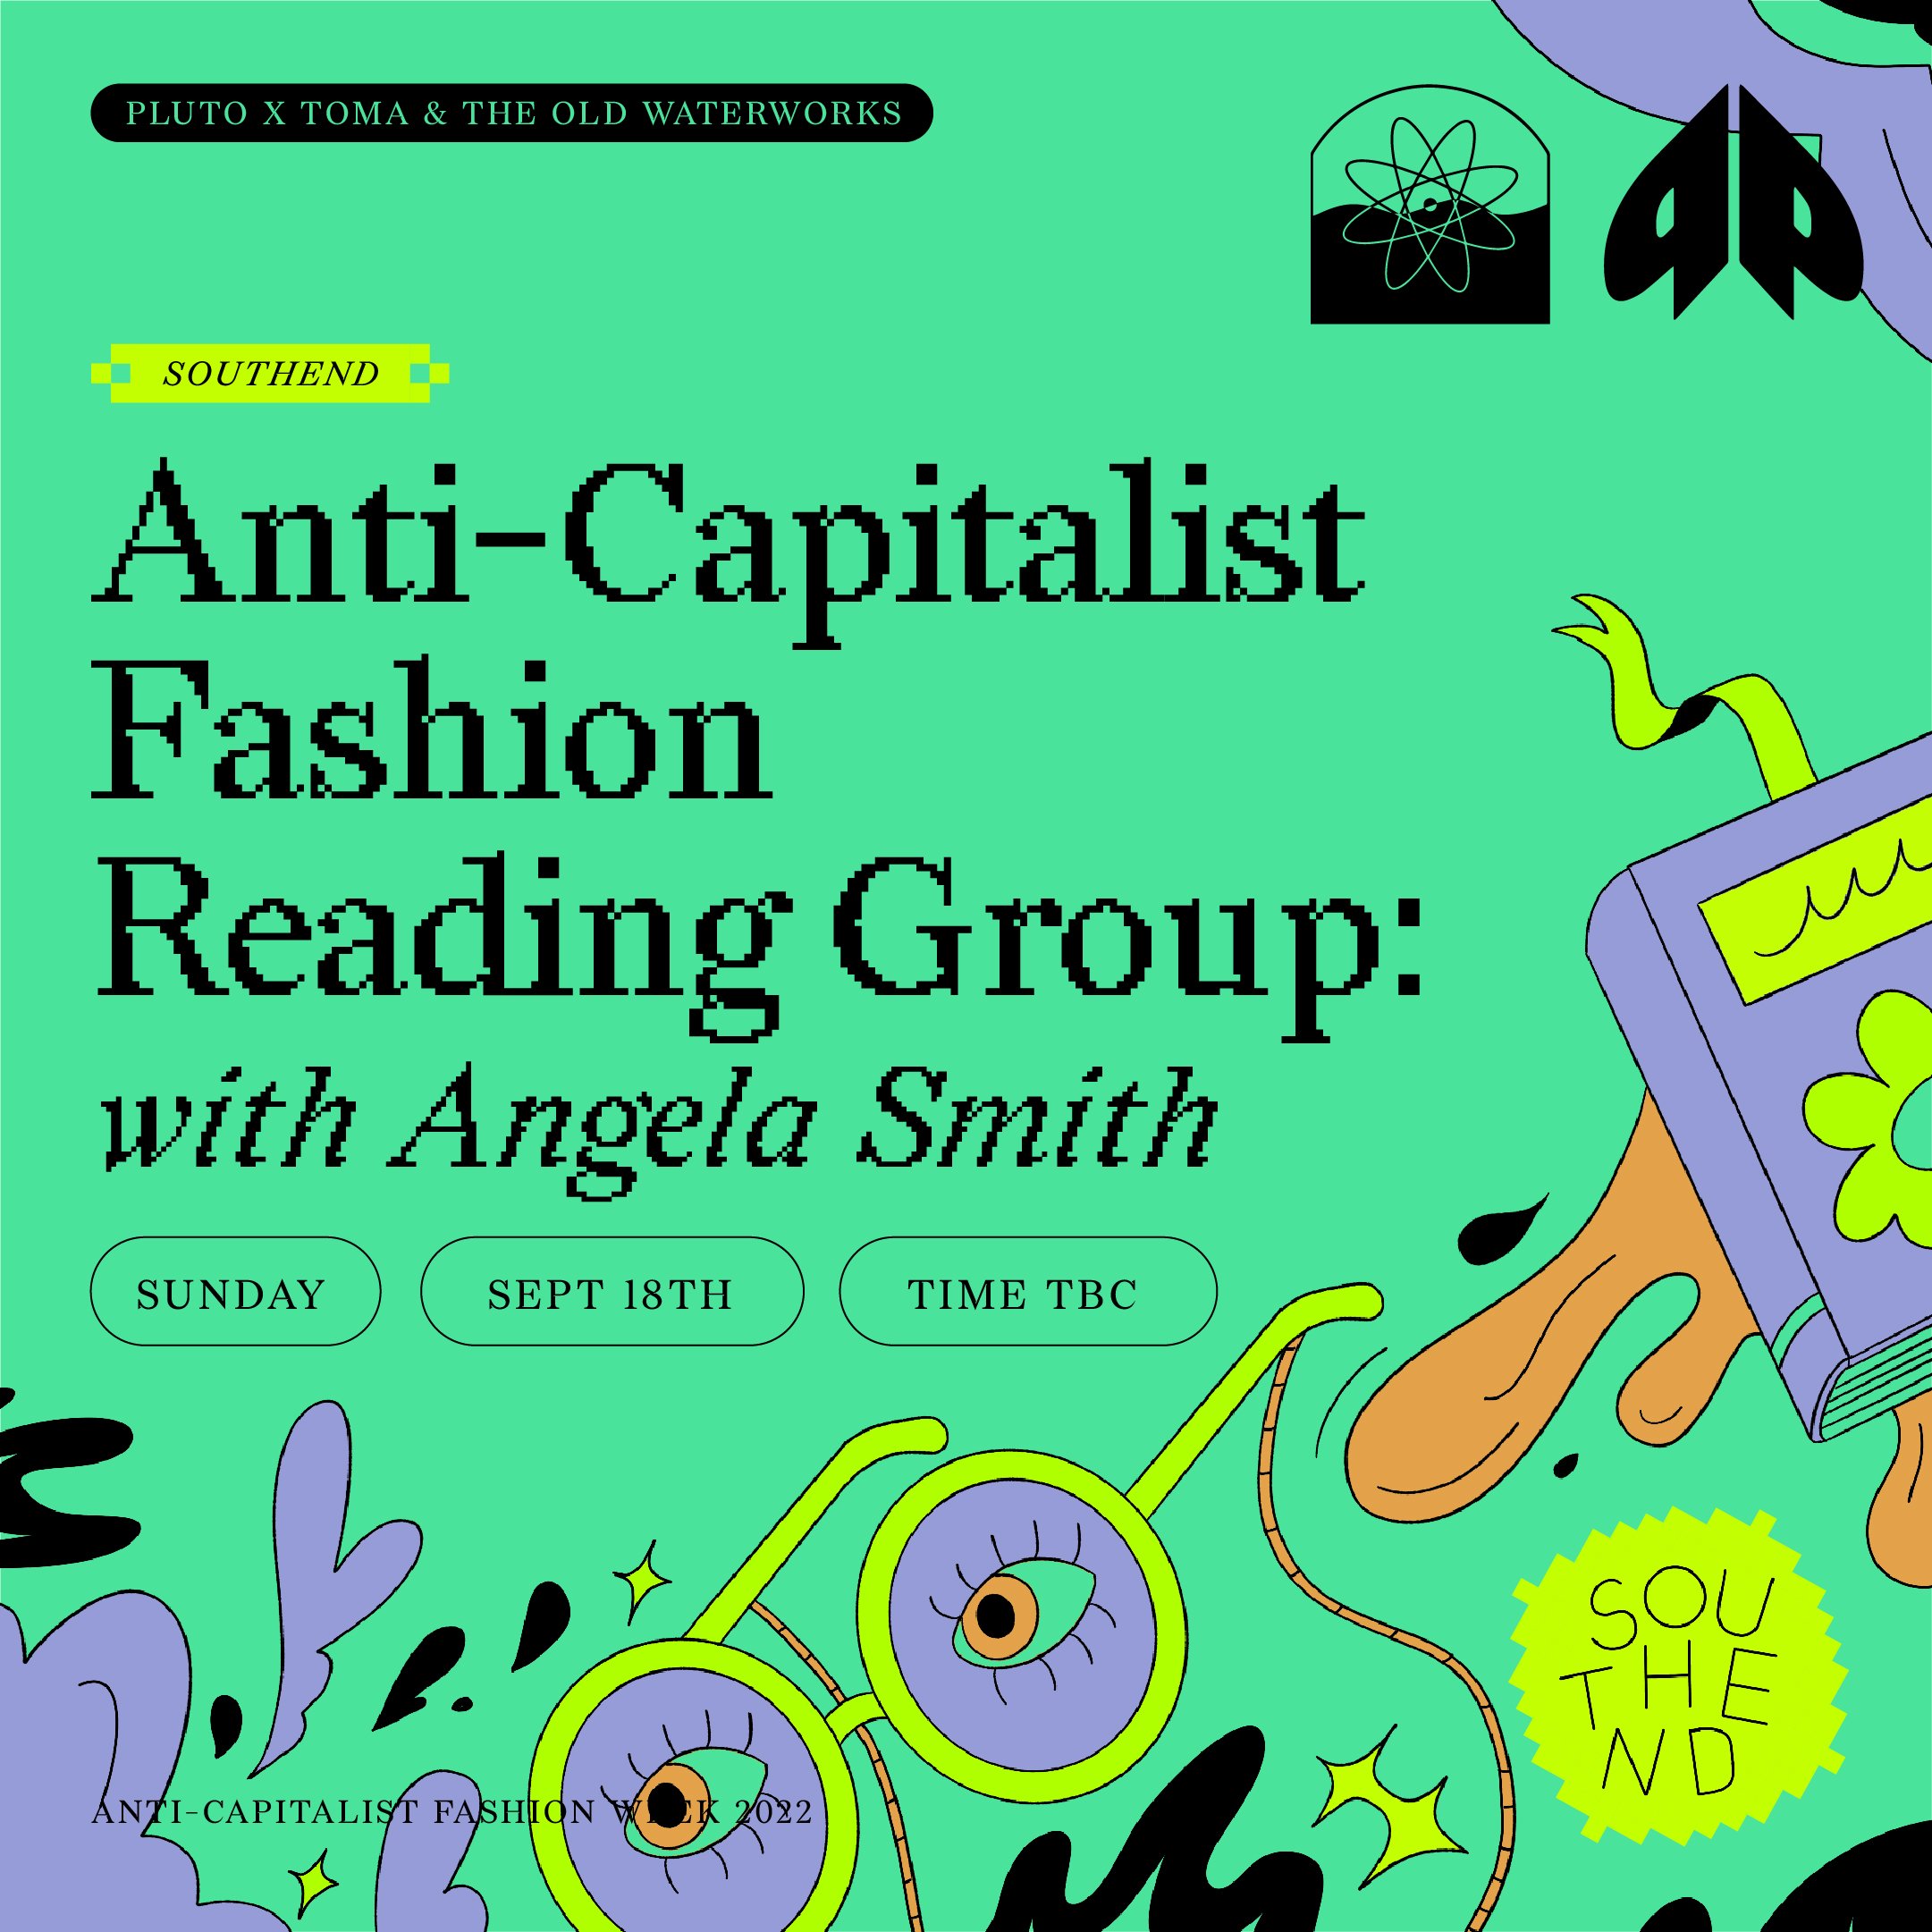 The Anti-Capitalist Book of Fashion